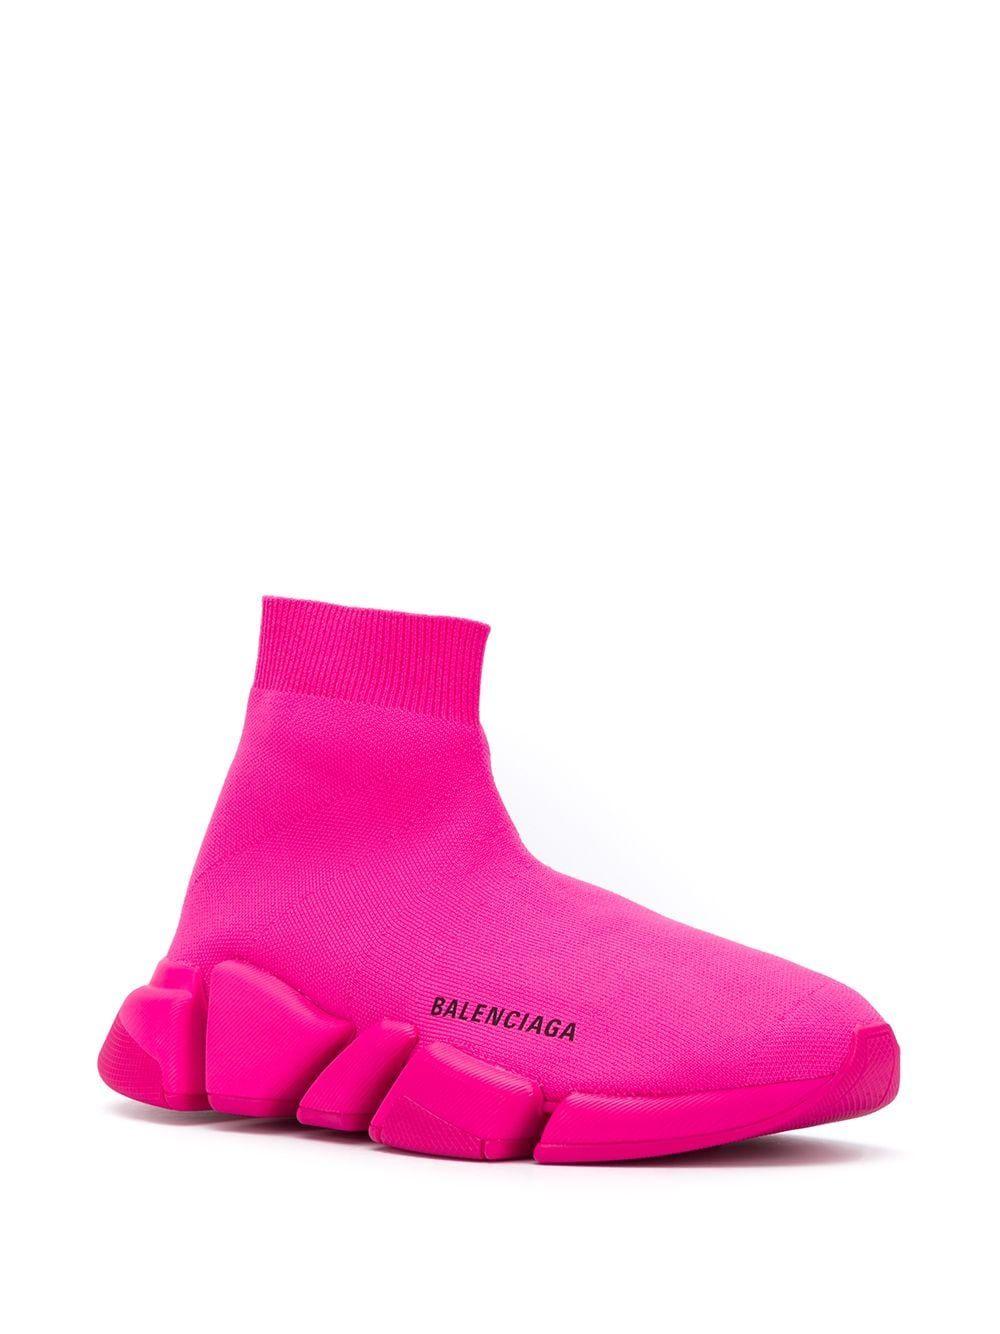 Balenciaga Slip-on Sock Sneakers in Pink | Lyst